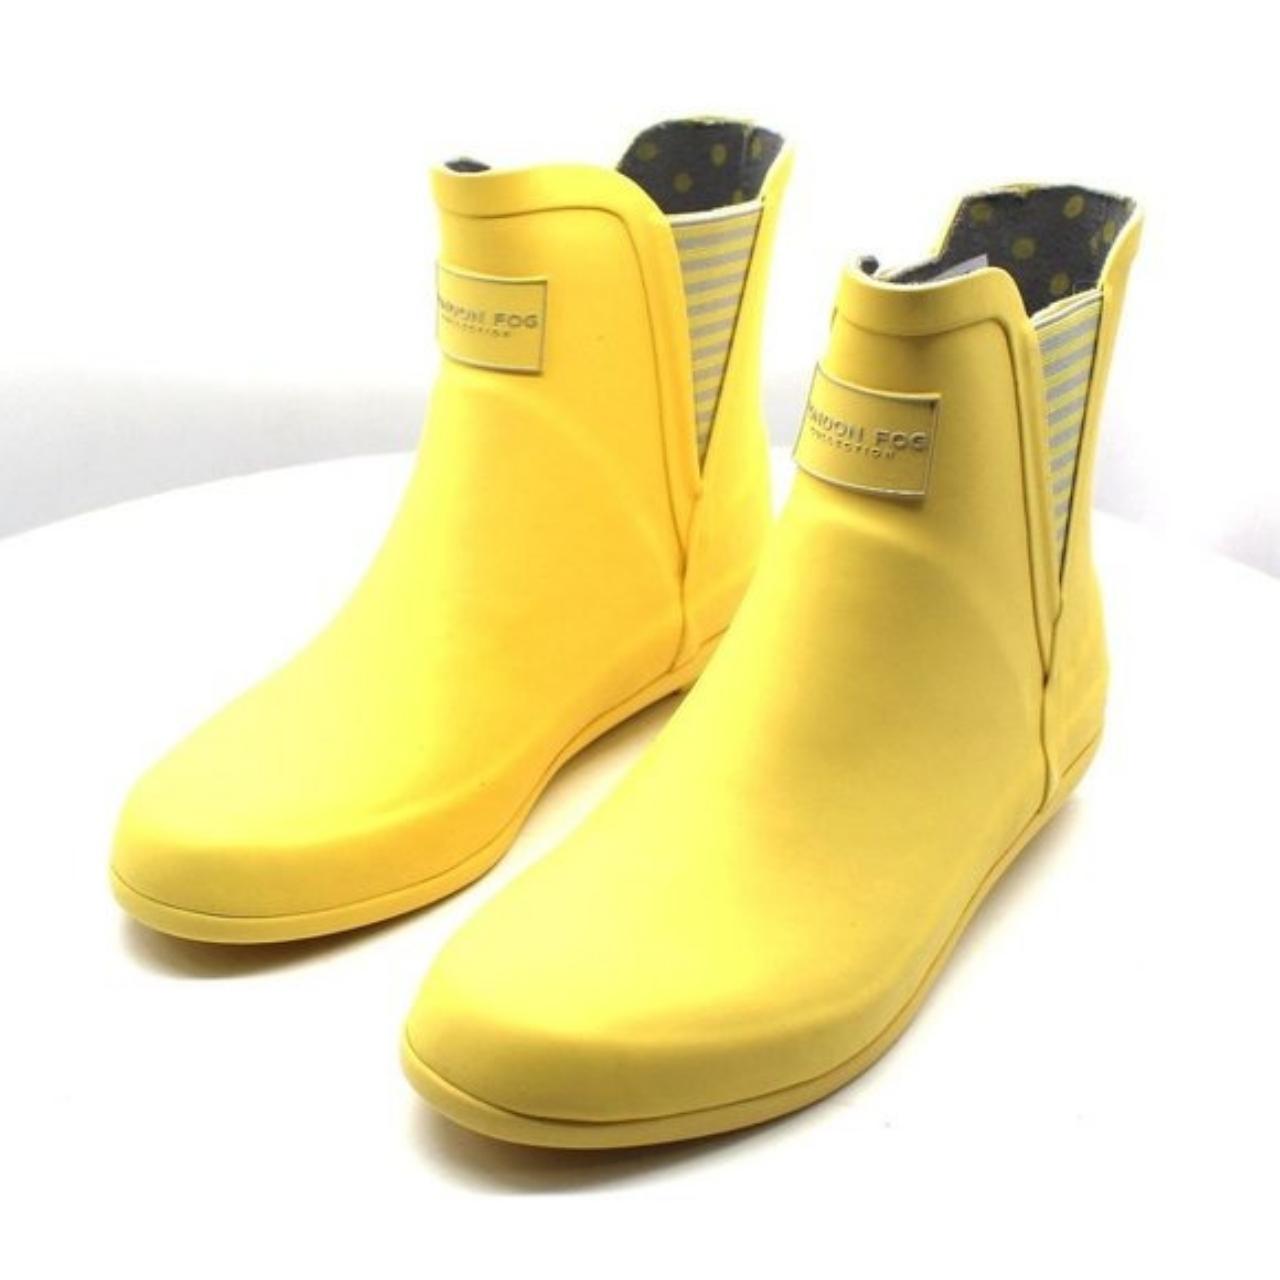 London Fog Women's Yellow Boots (3)